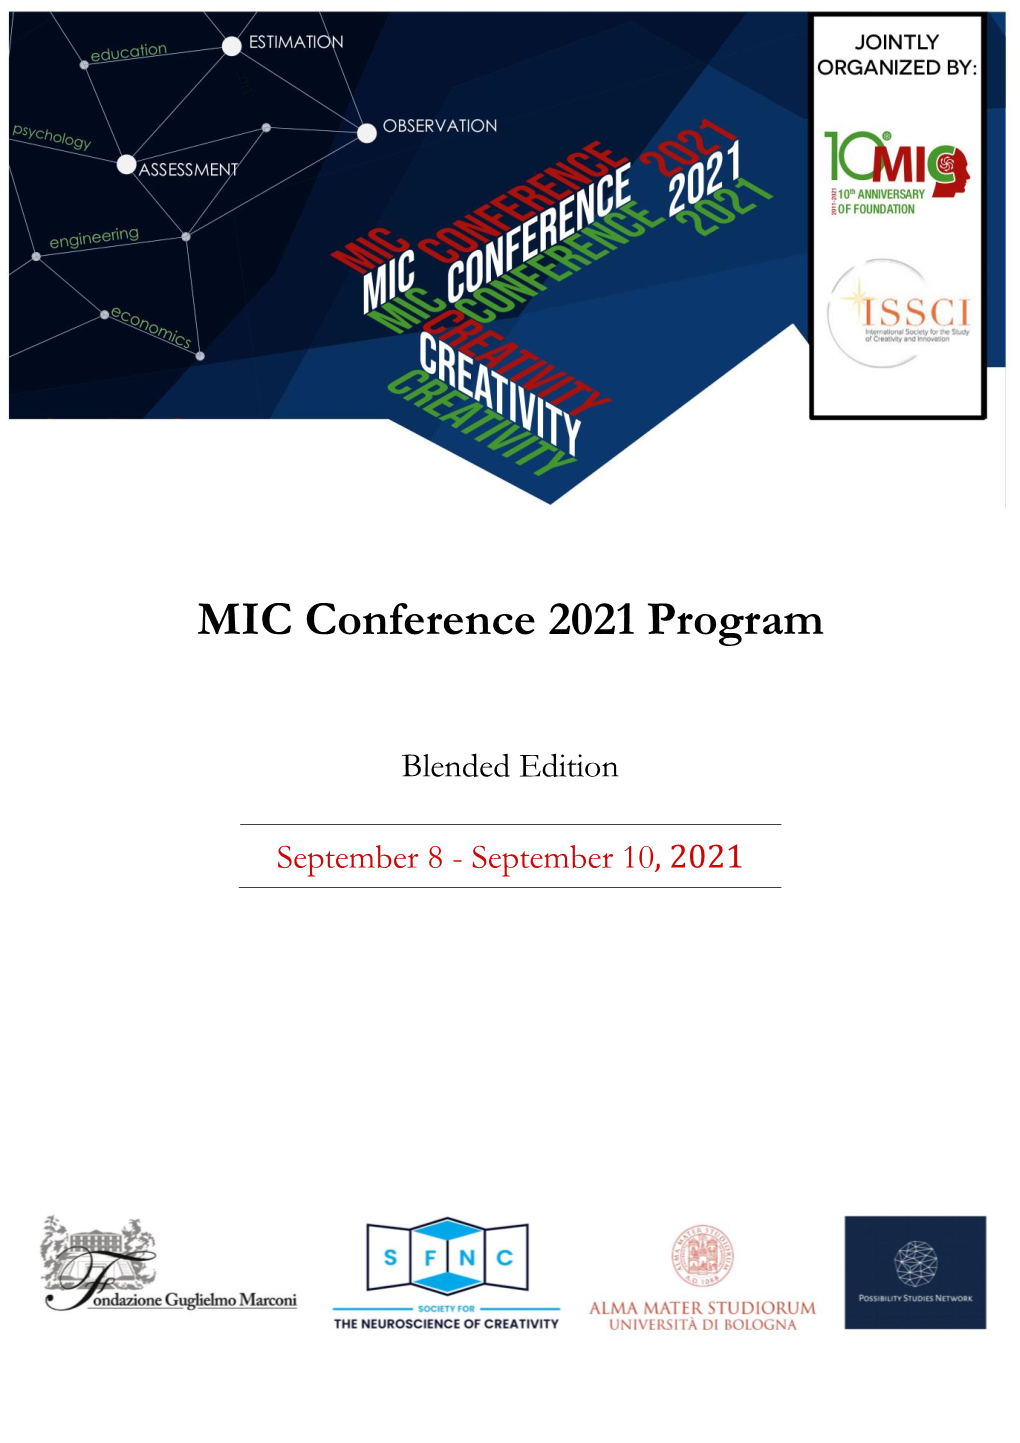 MIC Conference 2021 Program